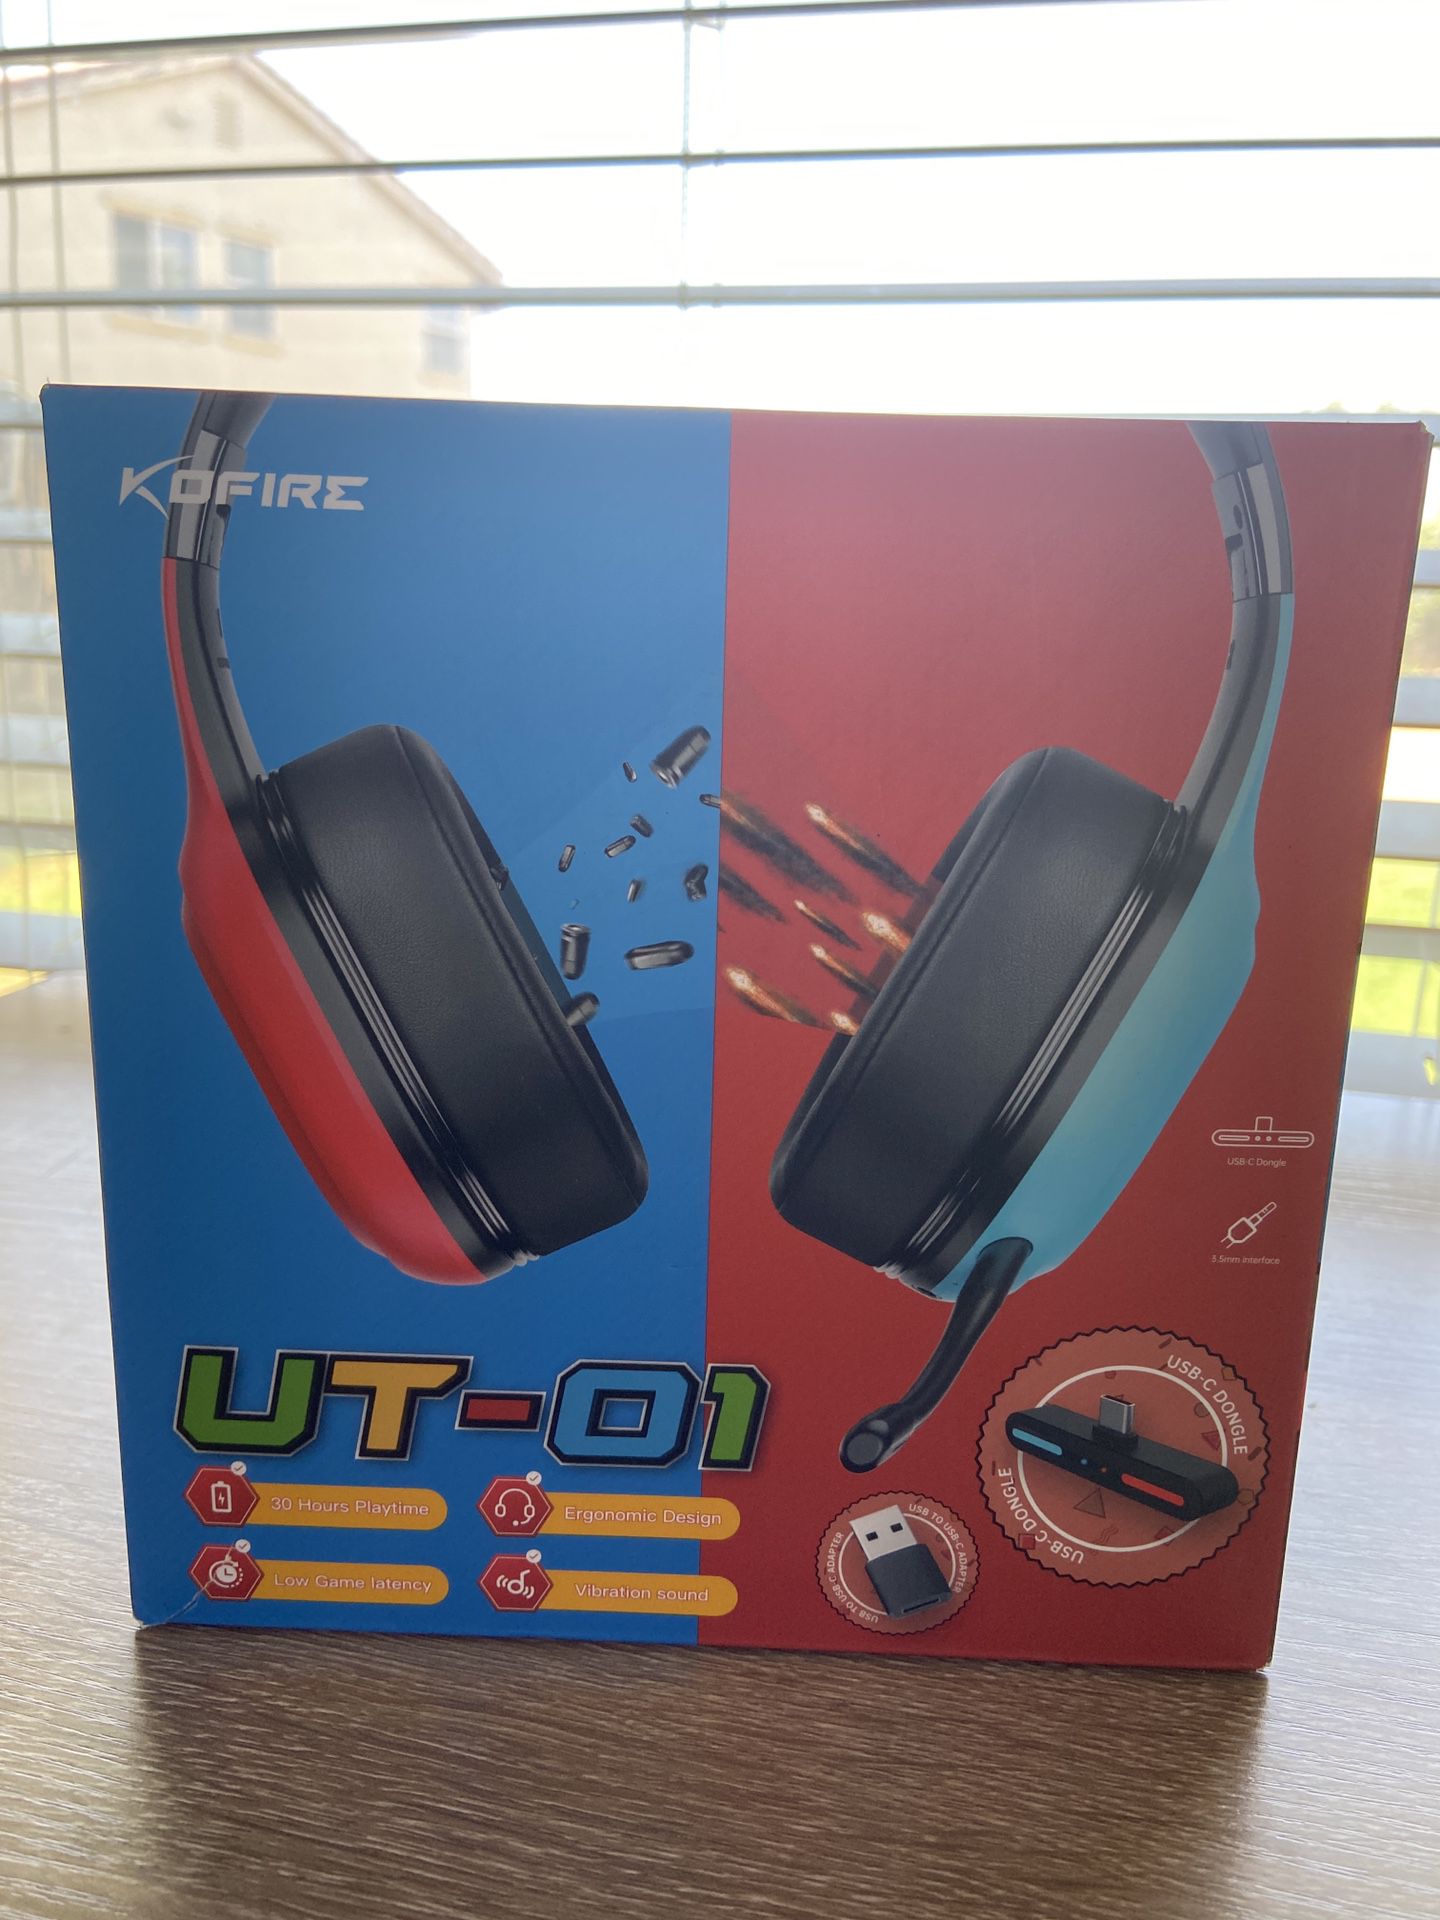 Kofire UT-01 Wireless Headset